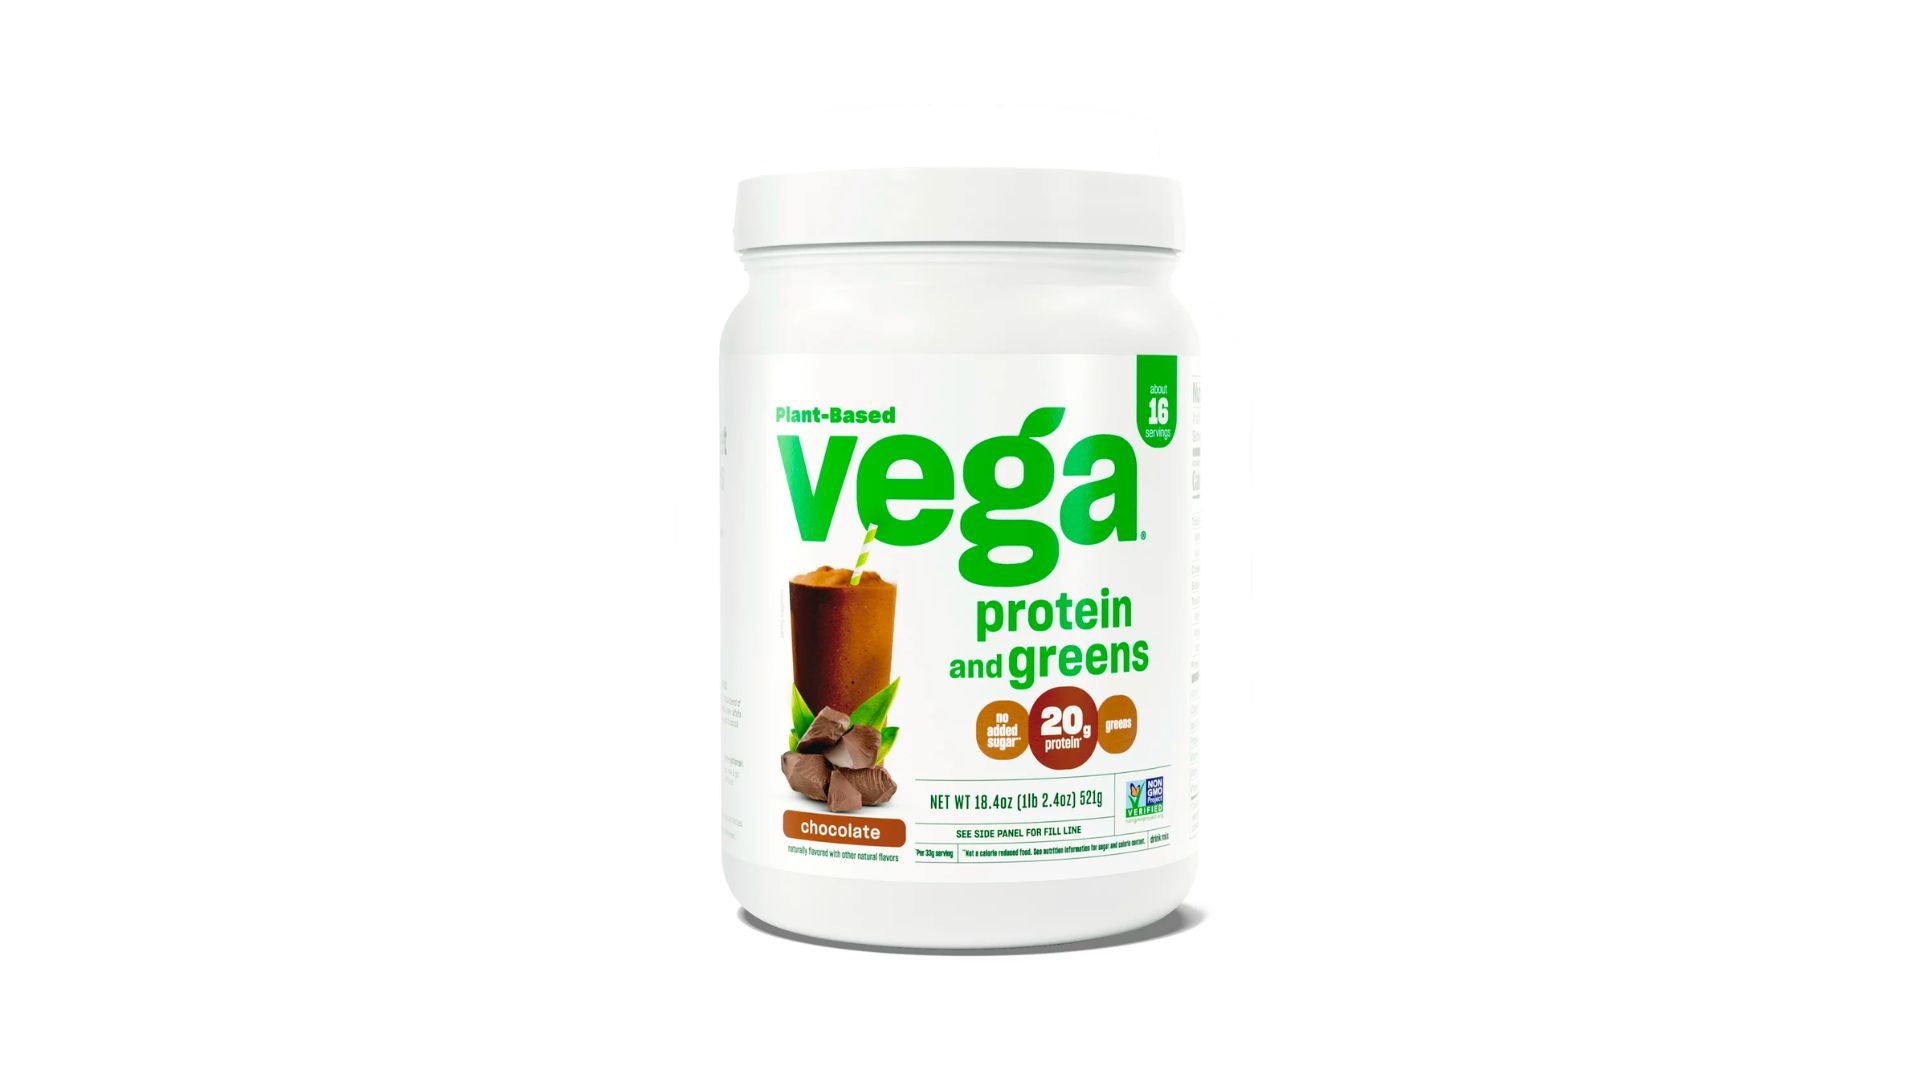 Best Vegan Protein Powders